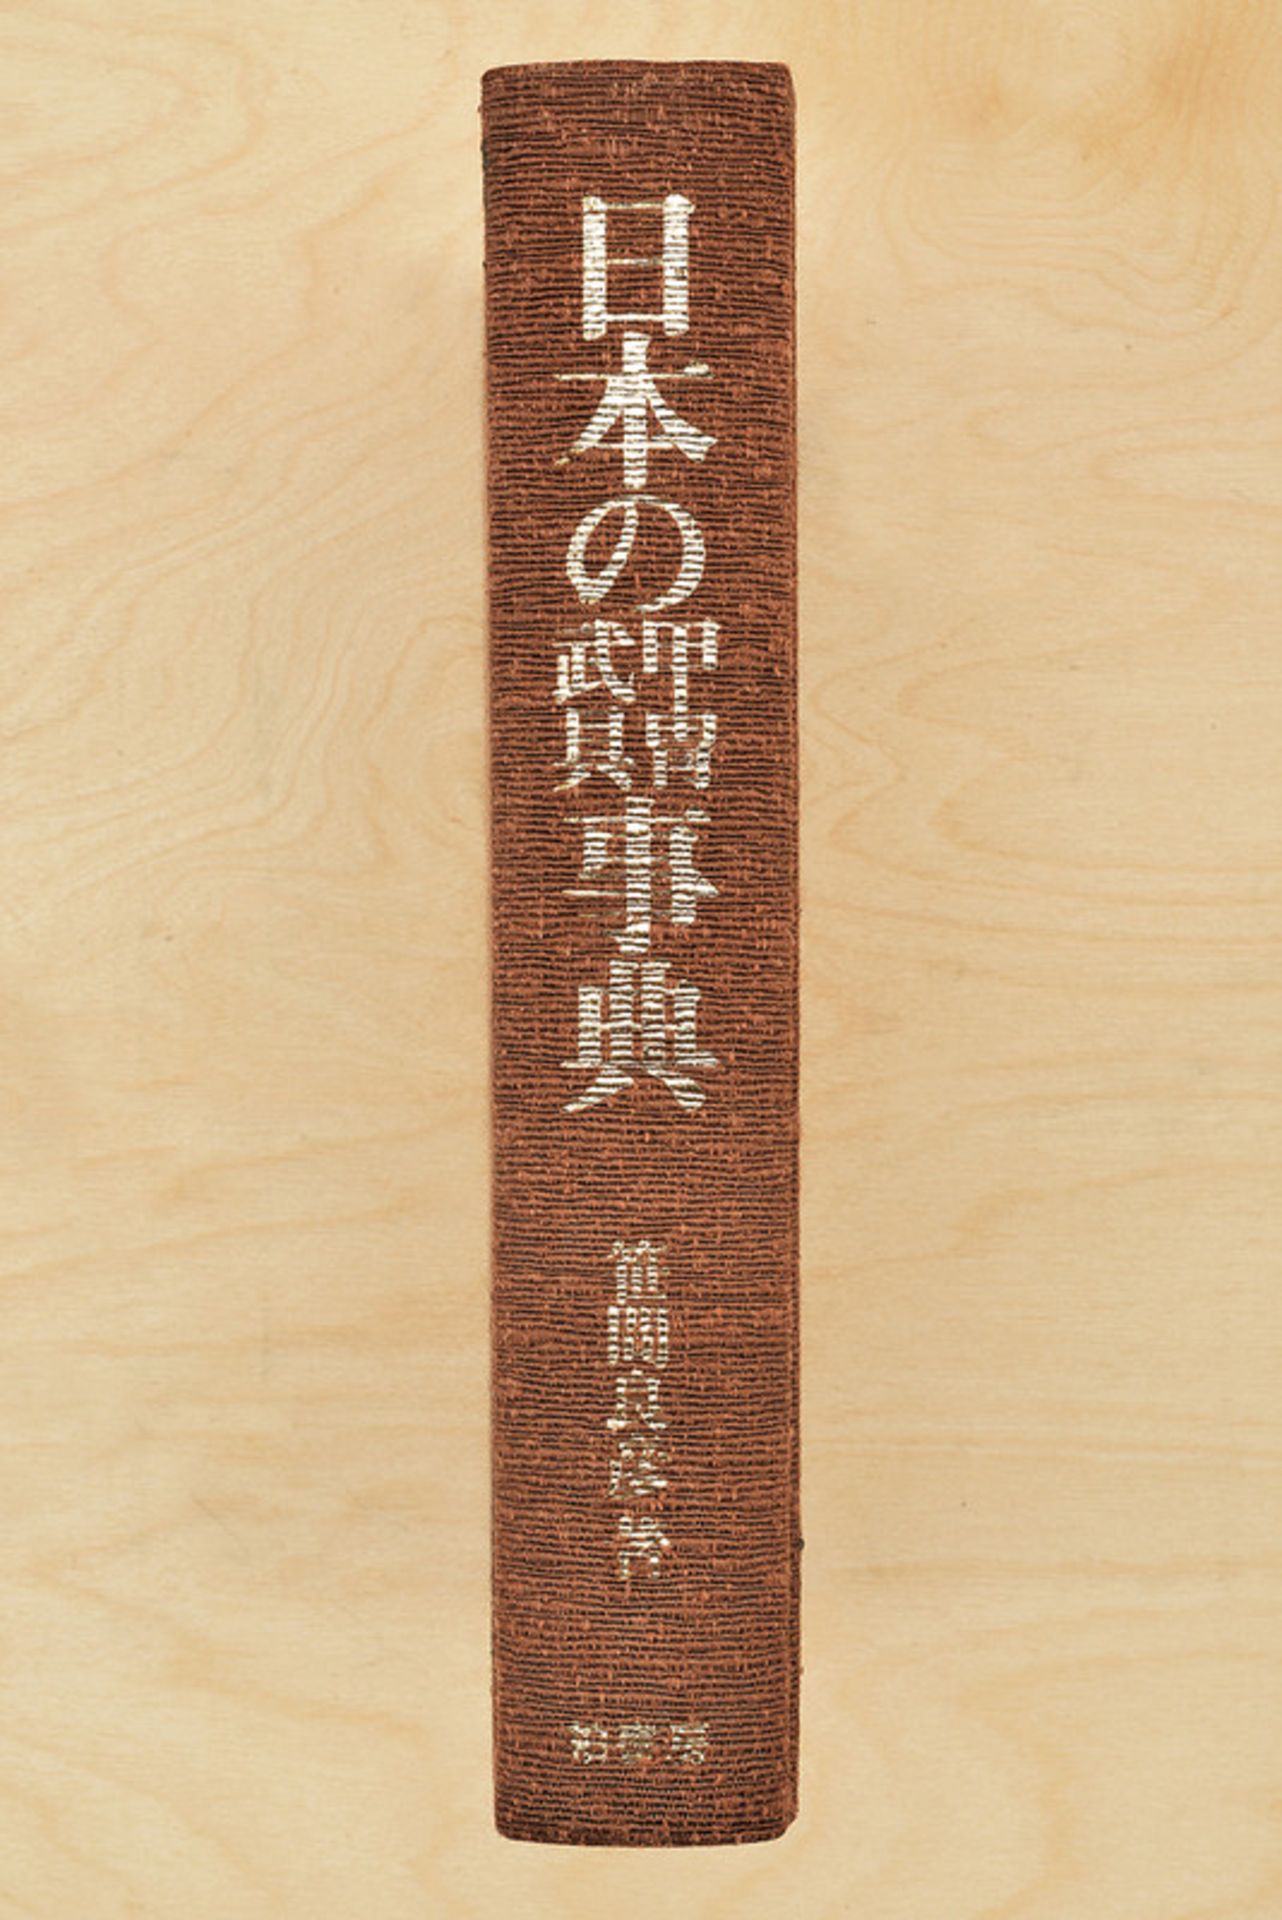 Sasama, Yoshihiko dating: 20th Century provenance: Japan "Nihon no Katchu Bugu Jiten" (Dictionary of - Image 2 of 4